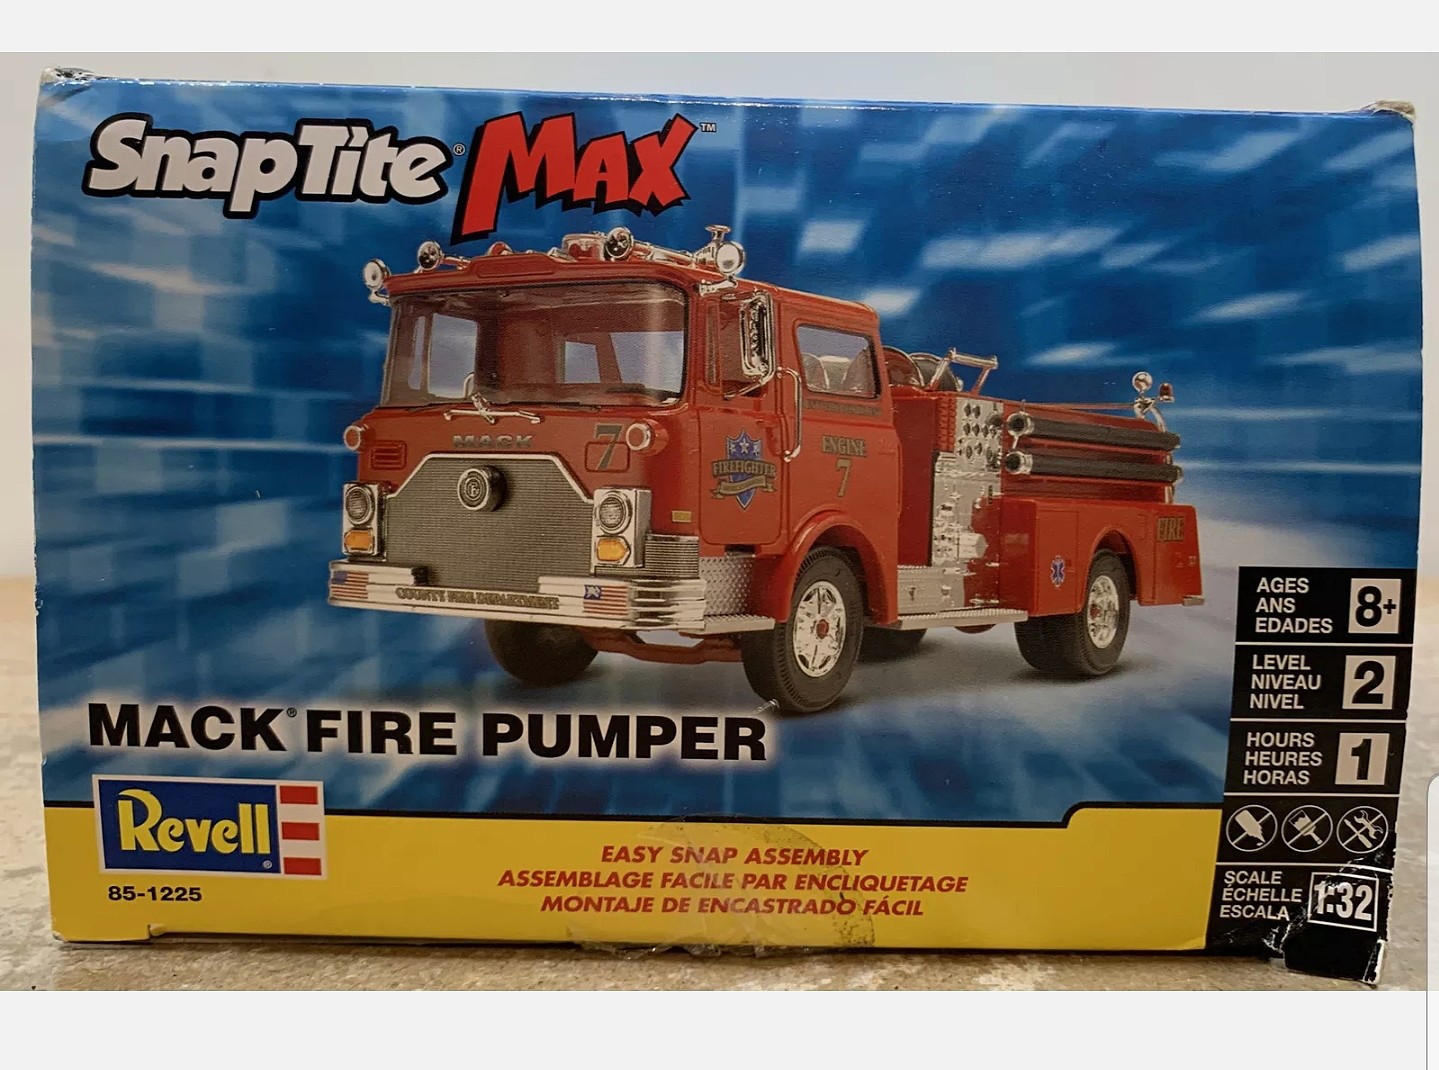 Revell 1225 1:32nd scale Mack Fire Engine Pumper